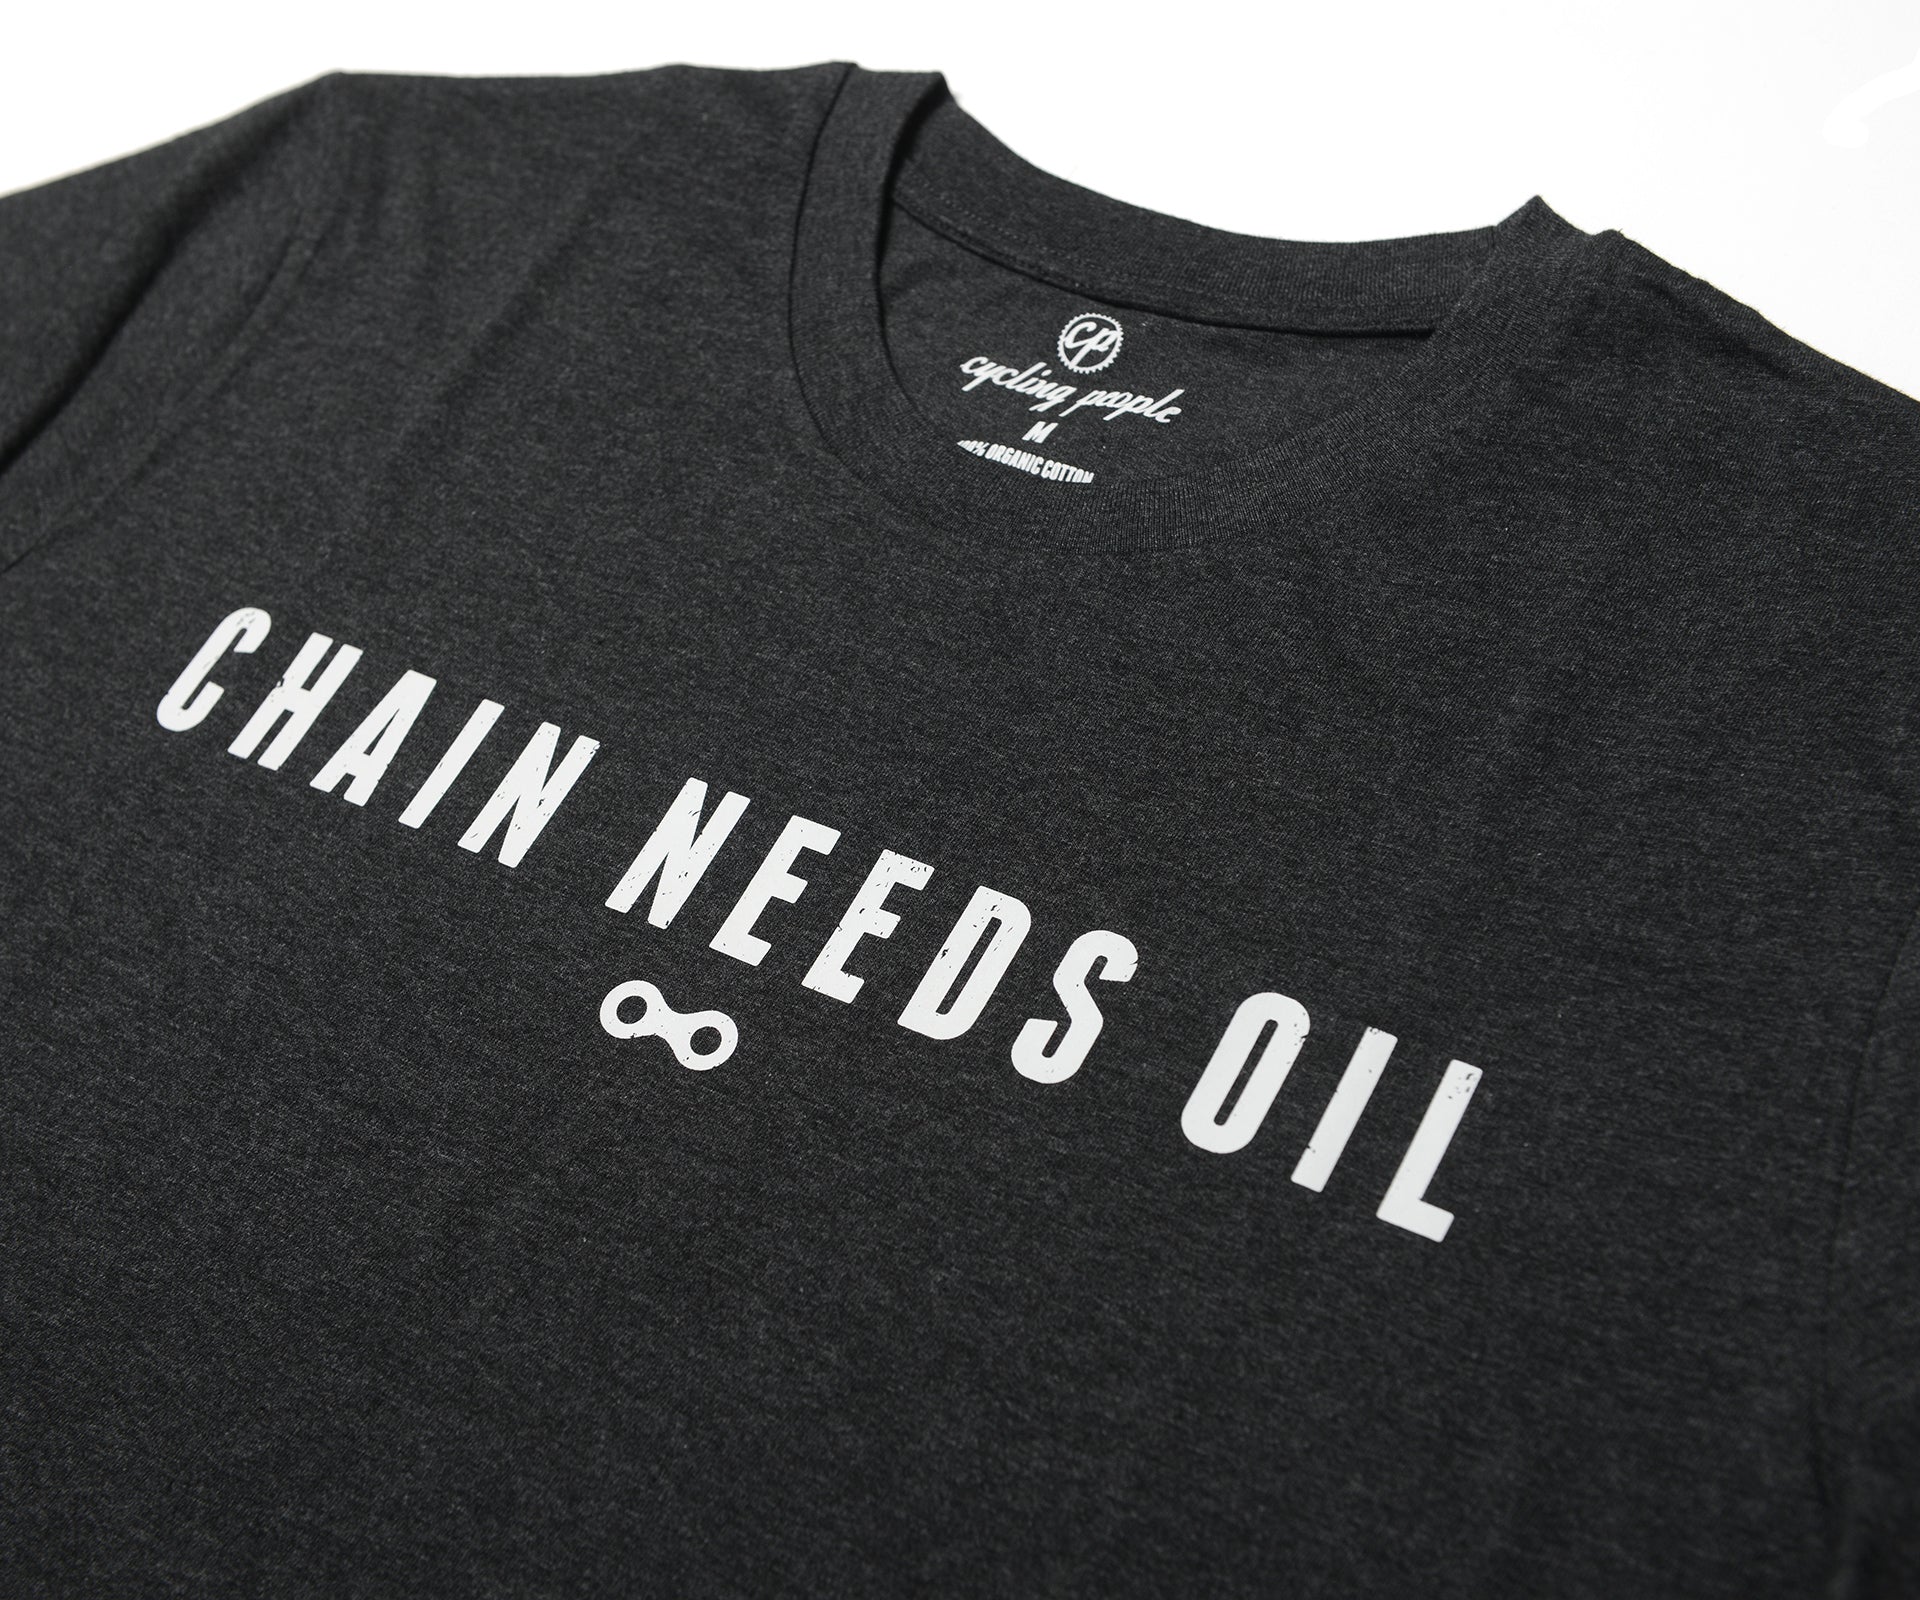 CHAIN NEEDS OIL MEN'S T-SHIRT